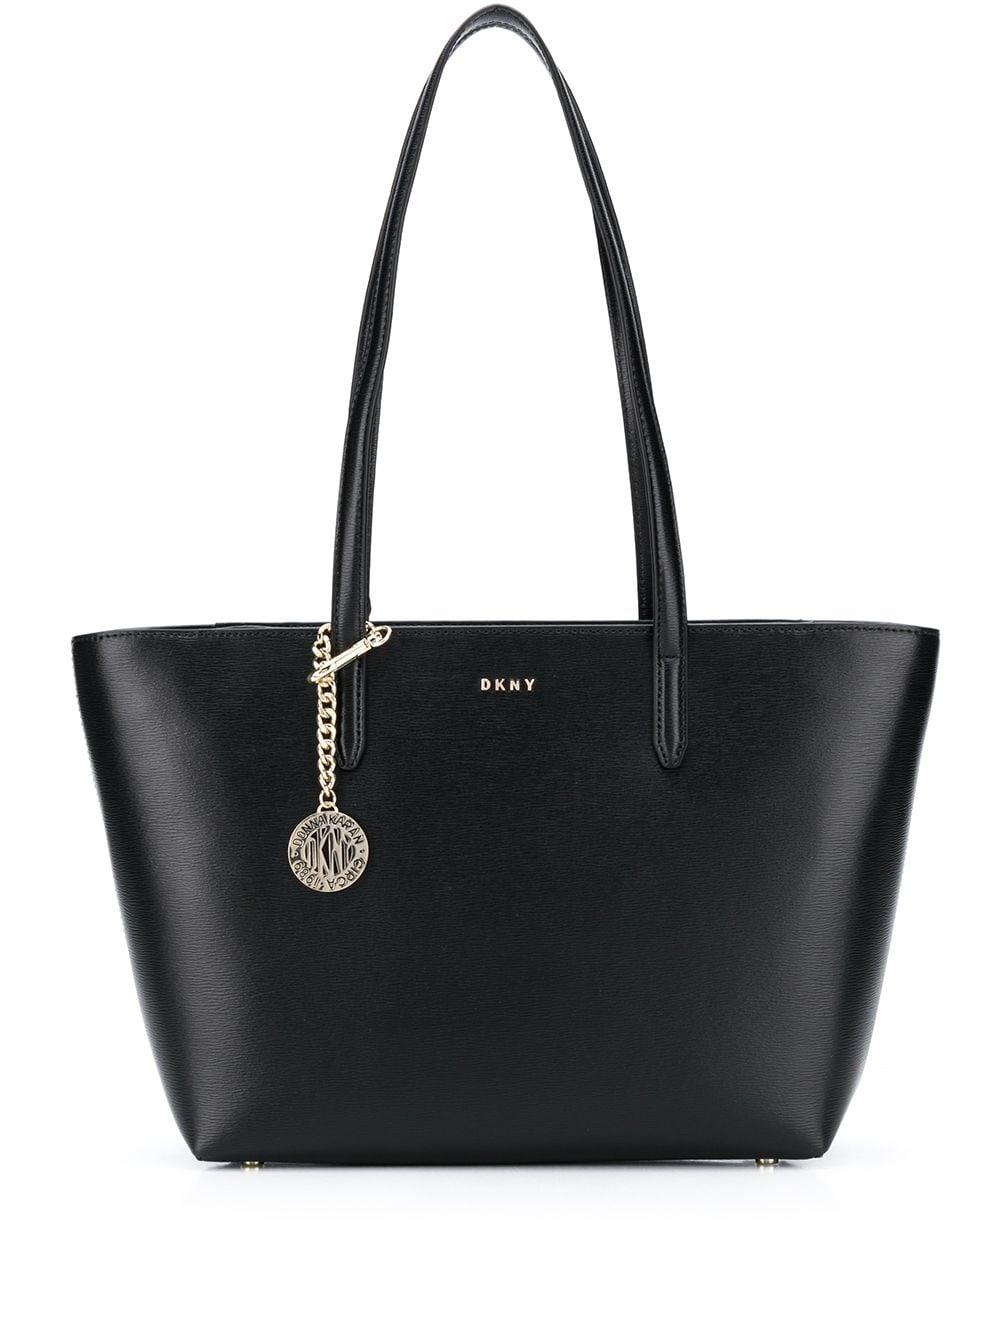 DKNY Leather Bryant Park Med Tote Bag in Black/Gold (Black) - Save 60% -  Lyst